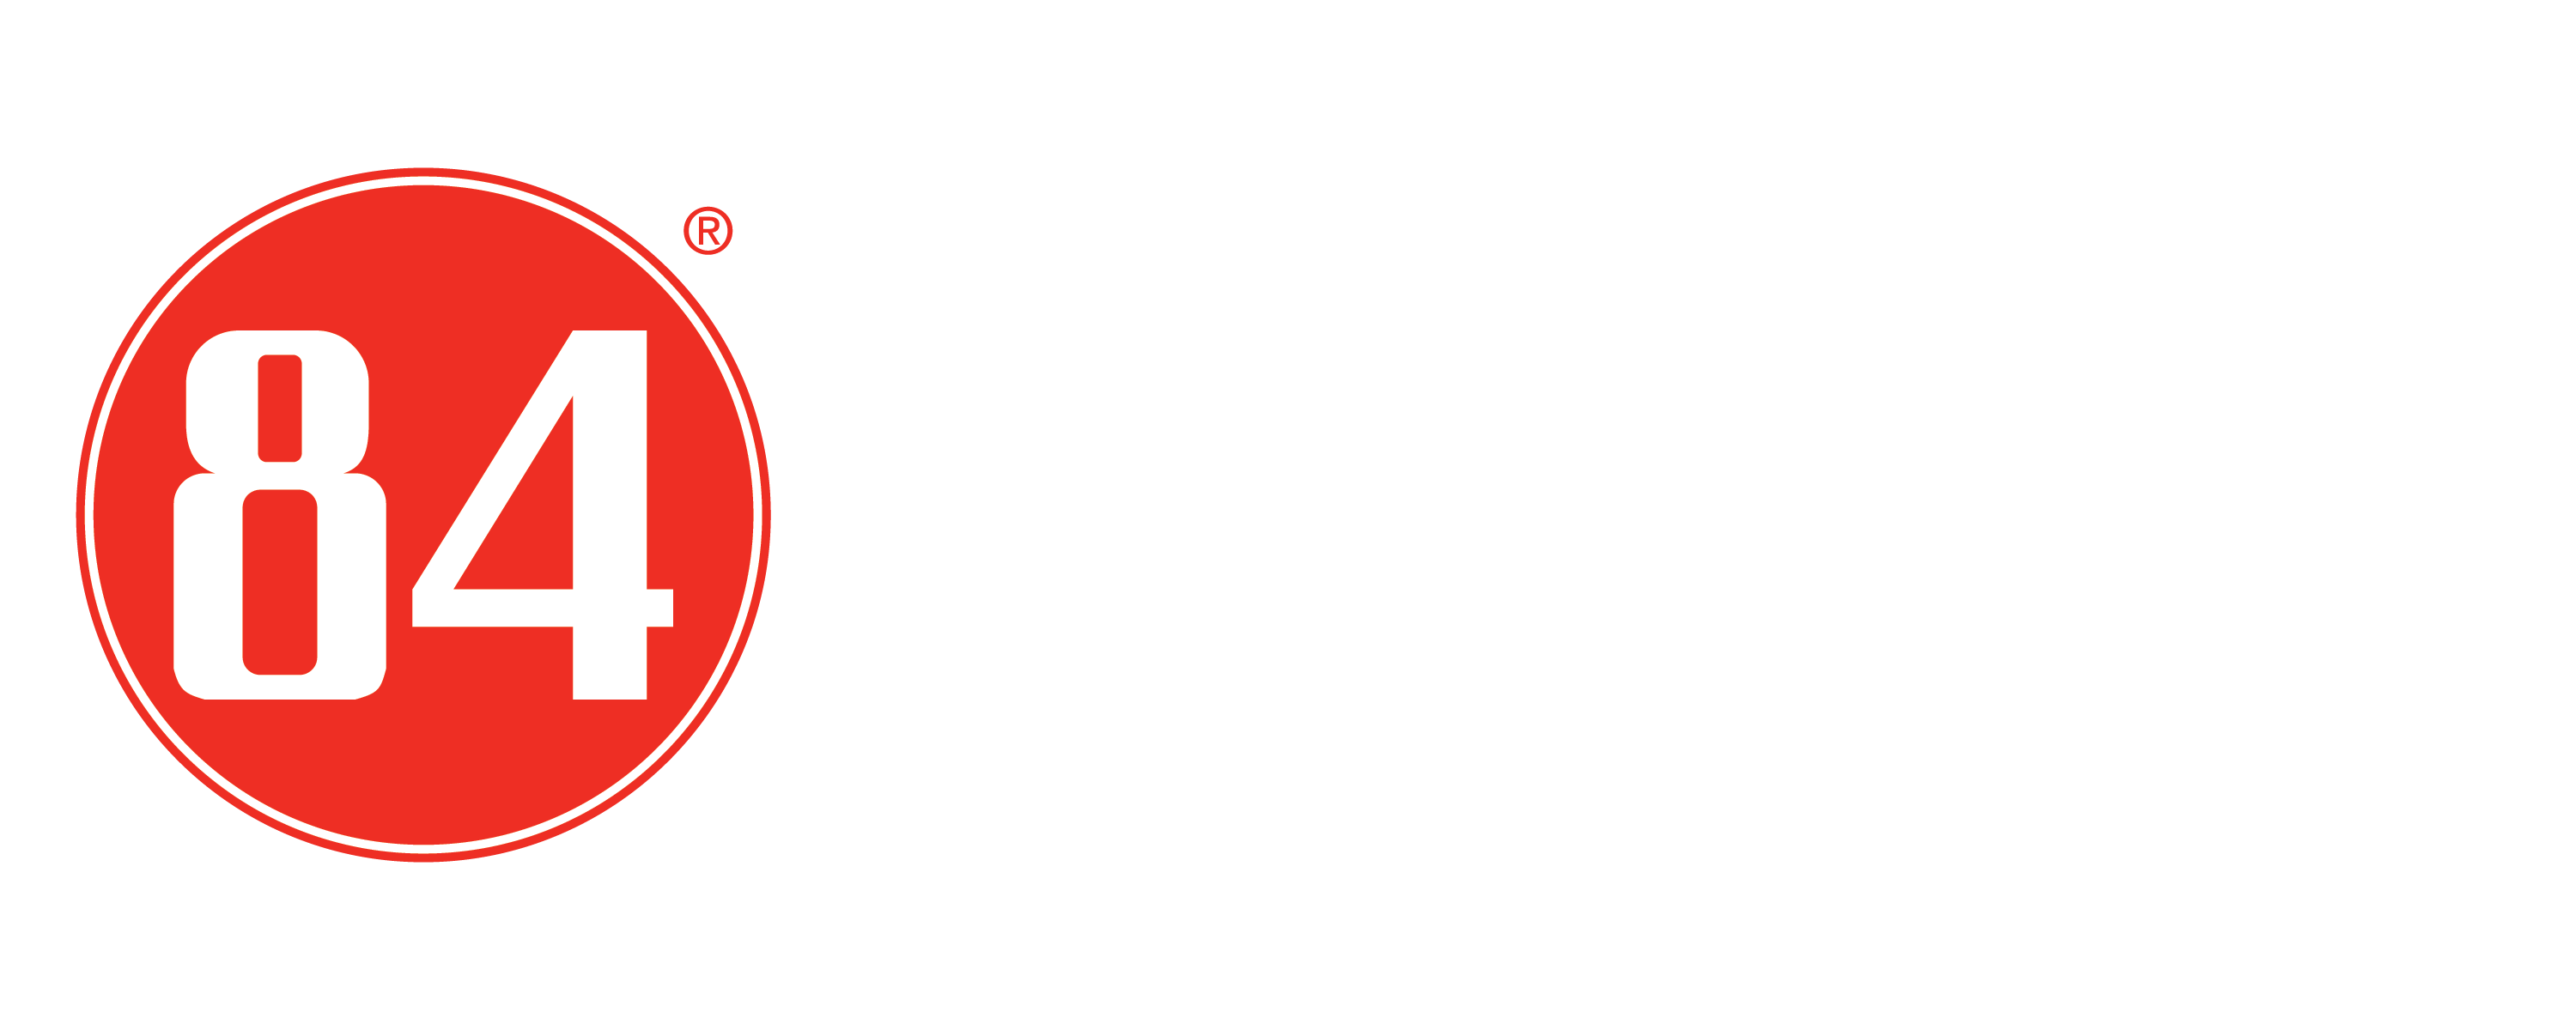 Company logo for '84 Lumber - Greensburg'.